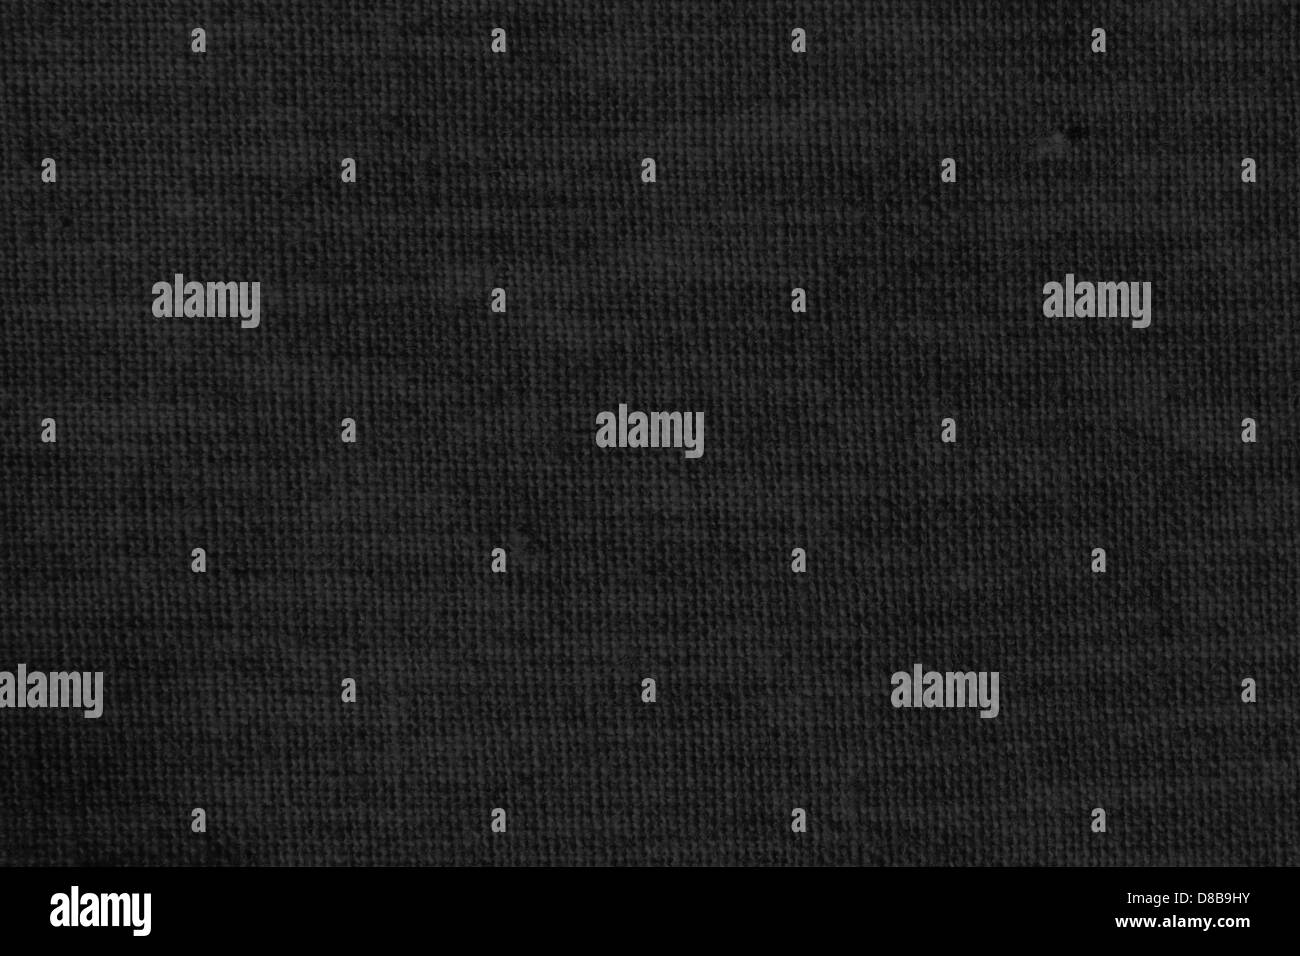 black woven fabric close up texture Stock Photo - Alamy